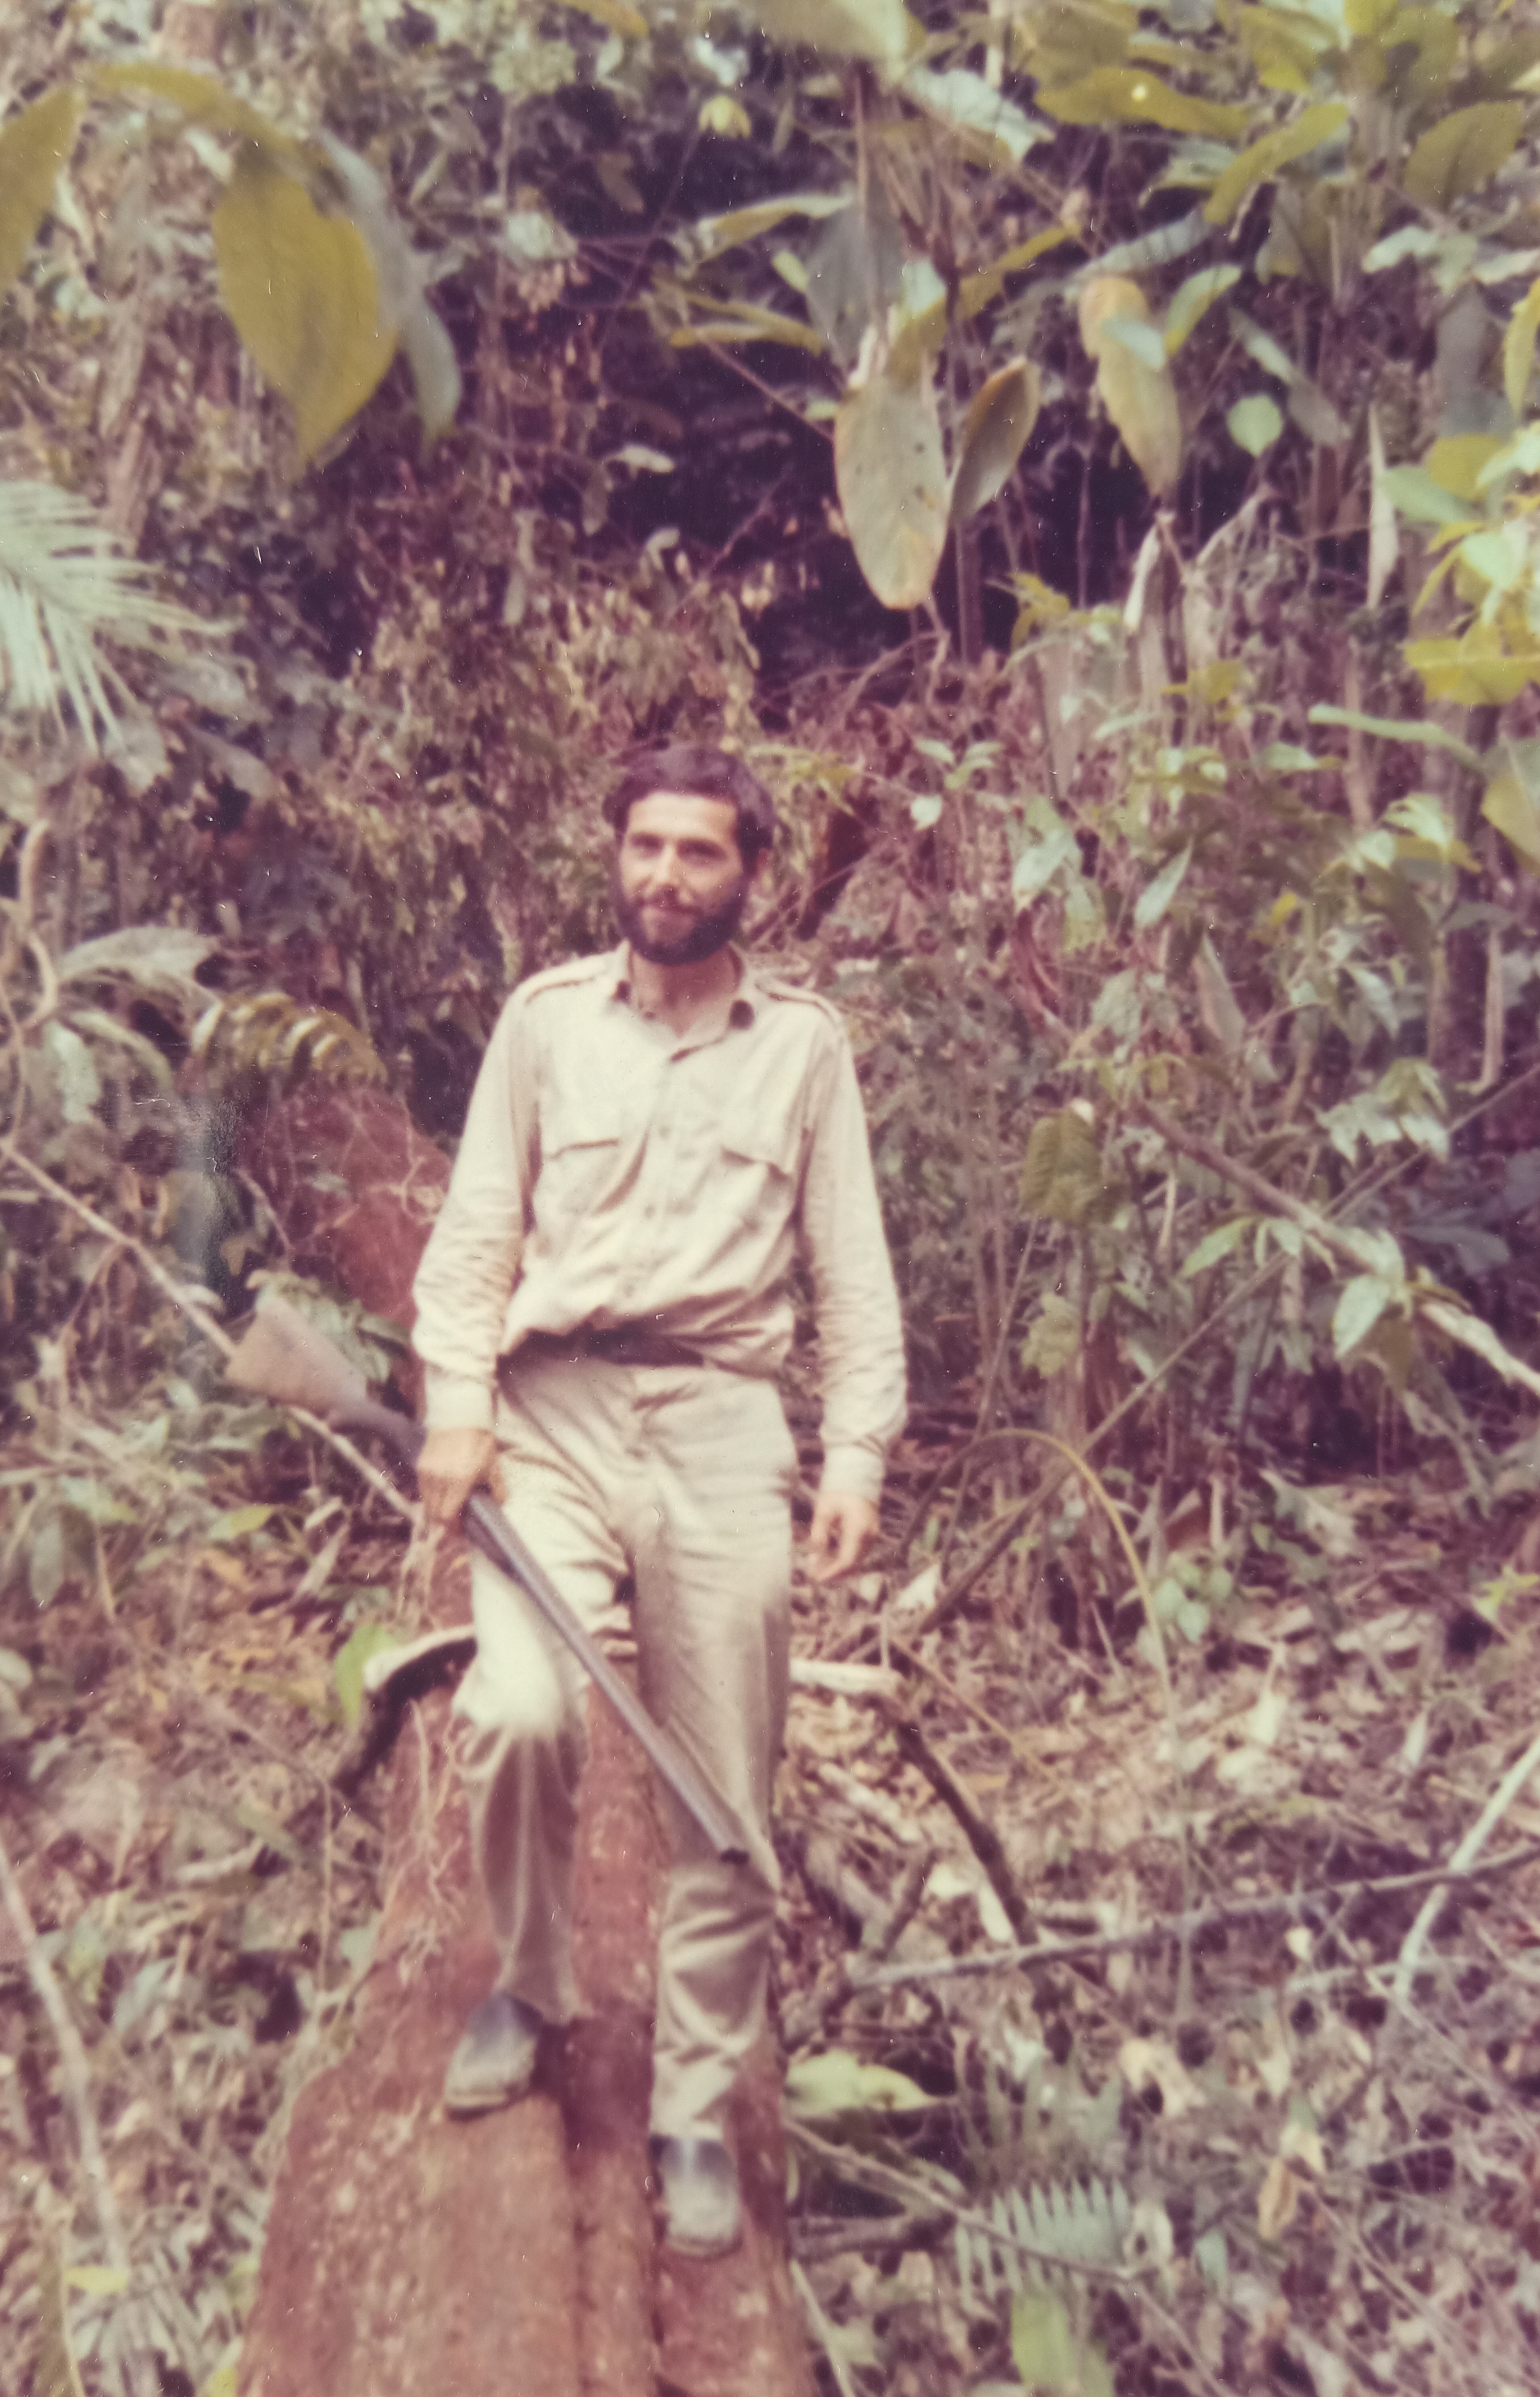 Paul Ort během expedice v Amazonii, 1962